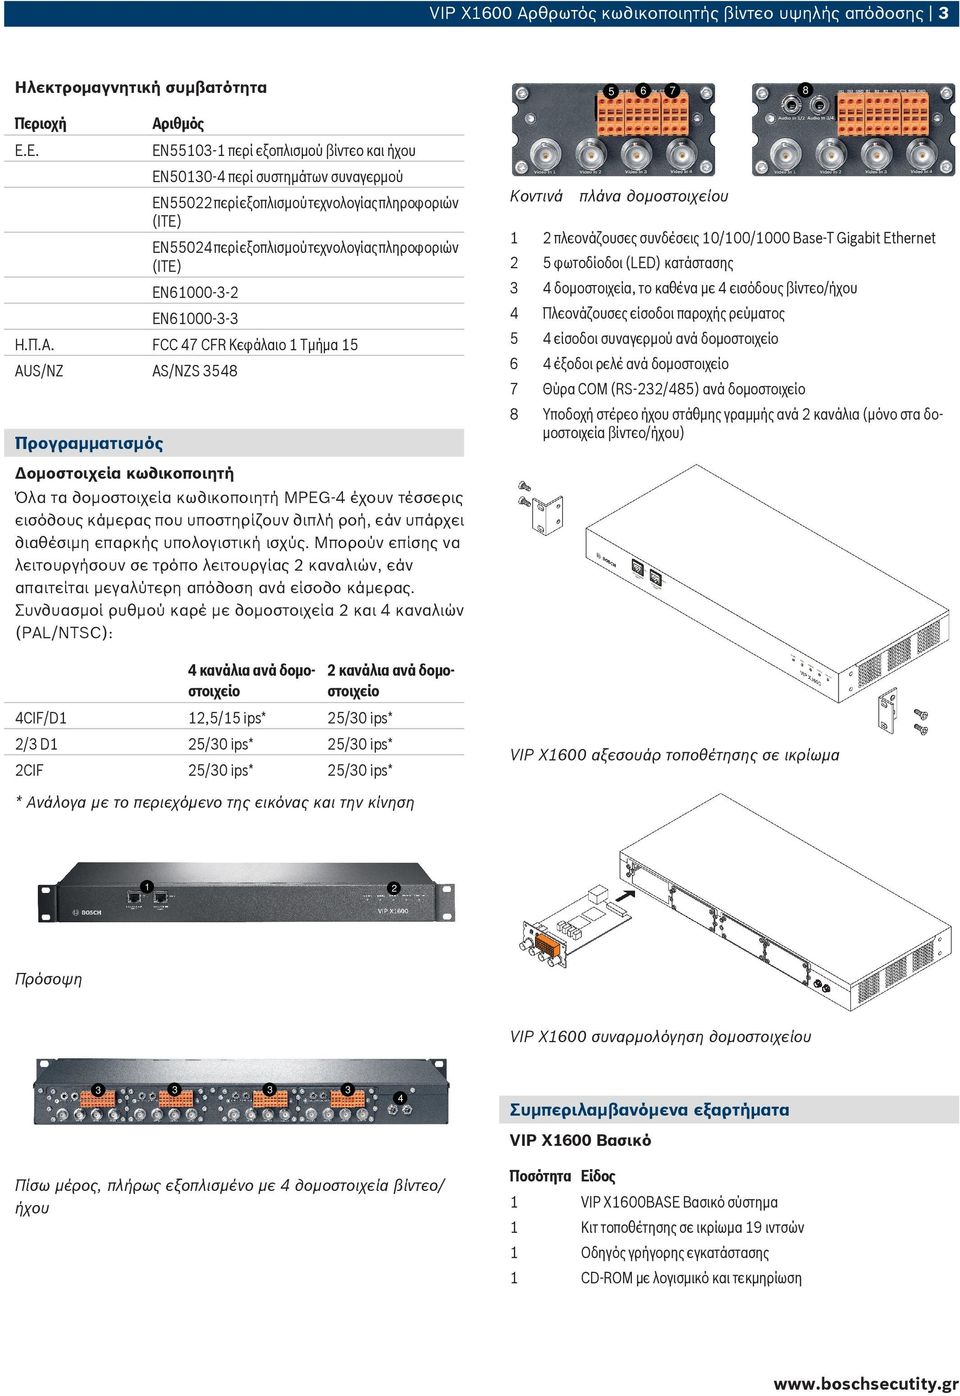 Base T Gigabit Ethernet 2 5 φωτοδίοδοι (LED) κατάστασης EN6000--2 4 δομοστοιχεία, το καθένα με 4 εισόδους βίντεο/ήχου EN6000-- 4 Πλεονάζουσες είσοδοι παροχής ρεύματος 5 4 είσοδοι συναγερμού ανά